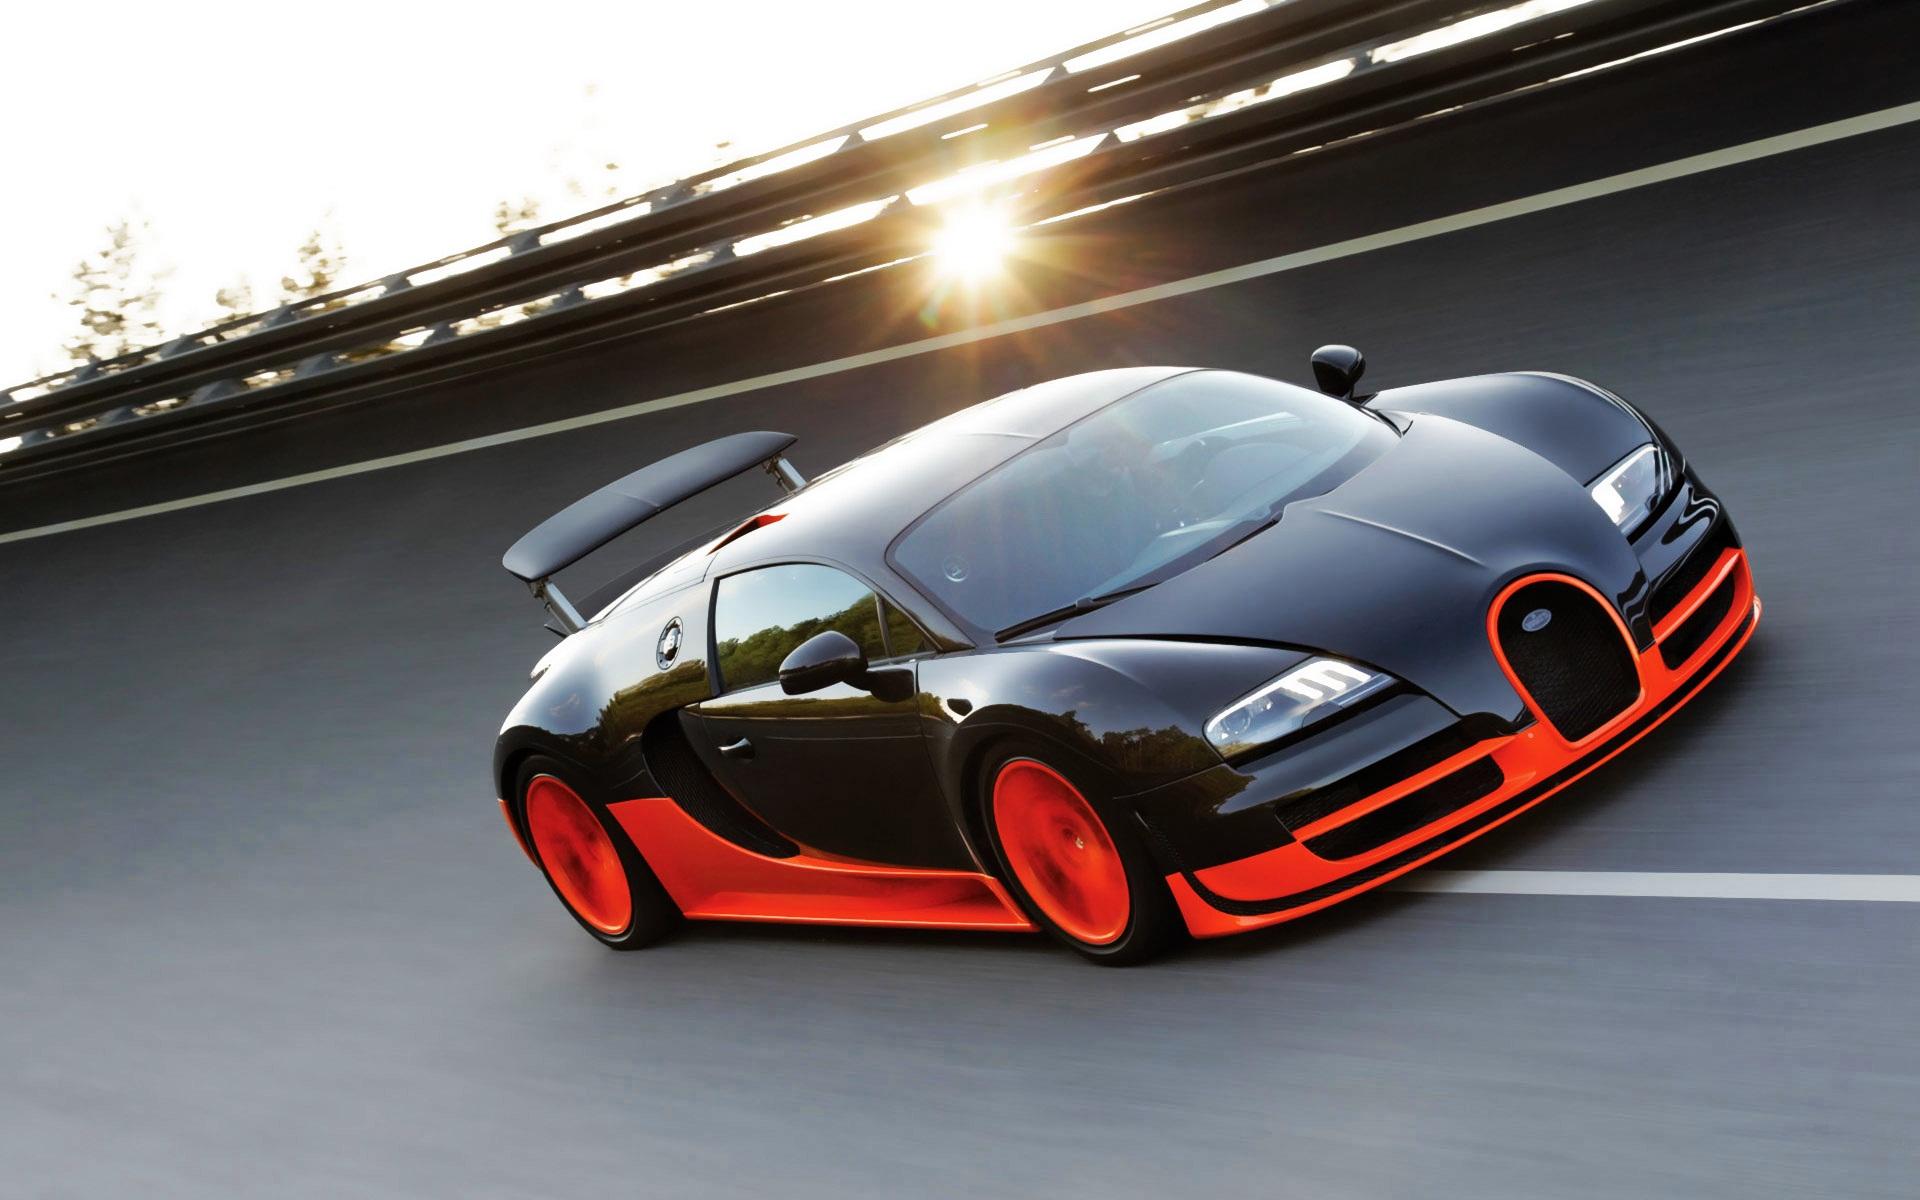 Bugatti Veyron SS 2010 # 1920x1200. All For Desktop